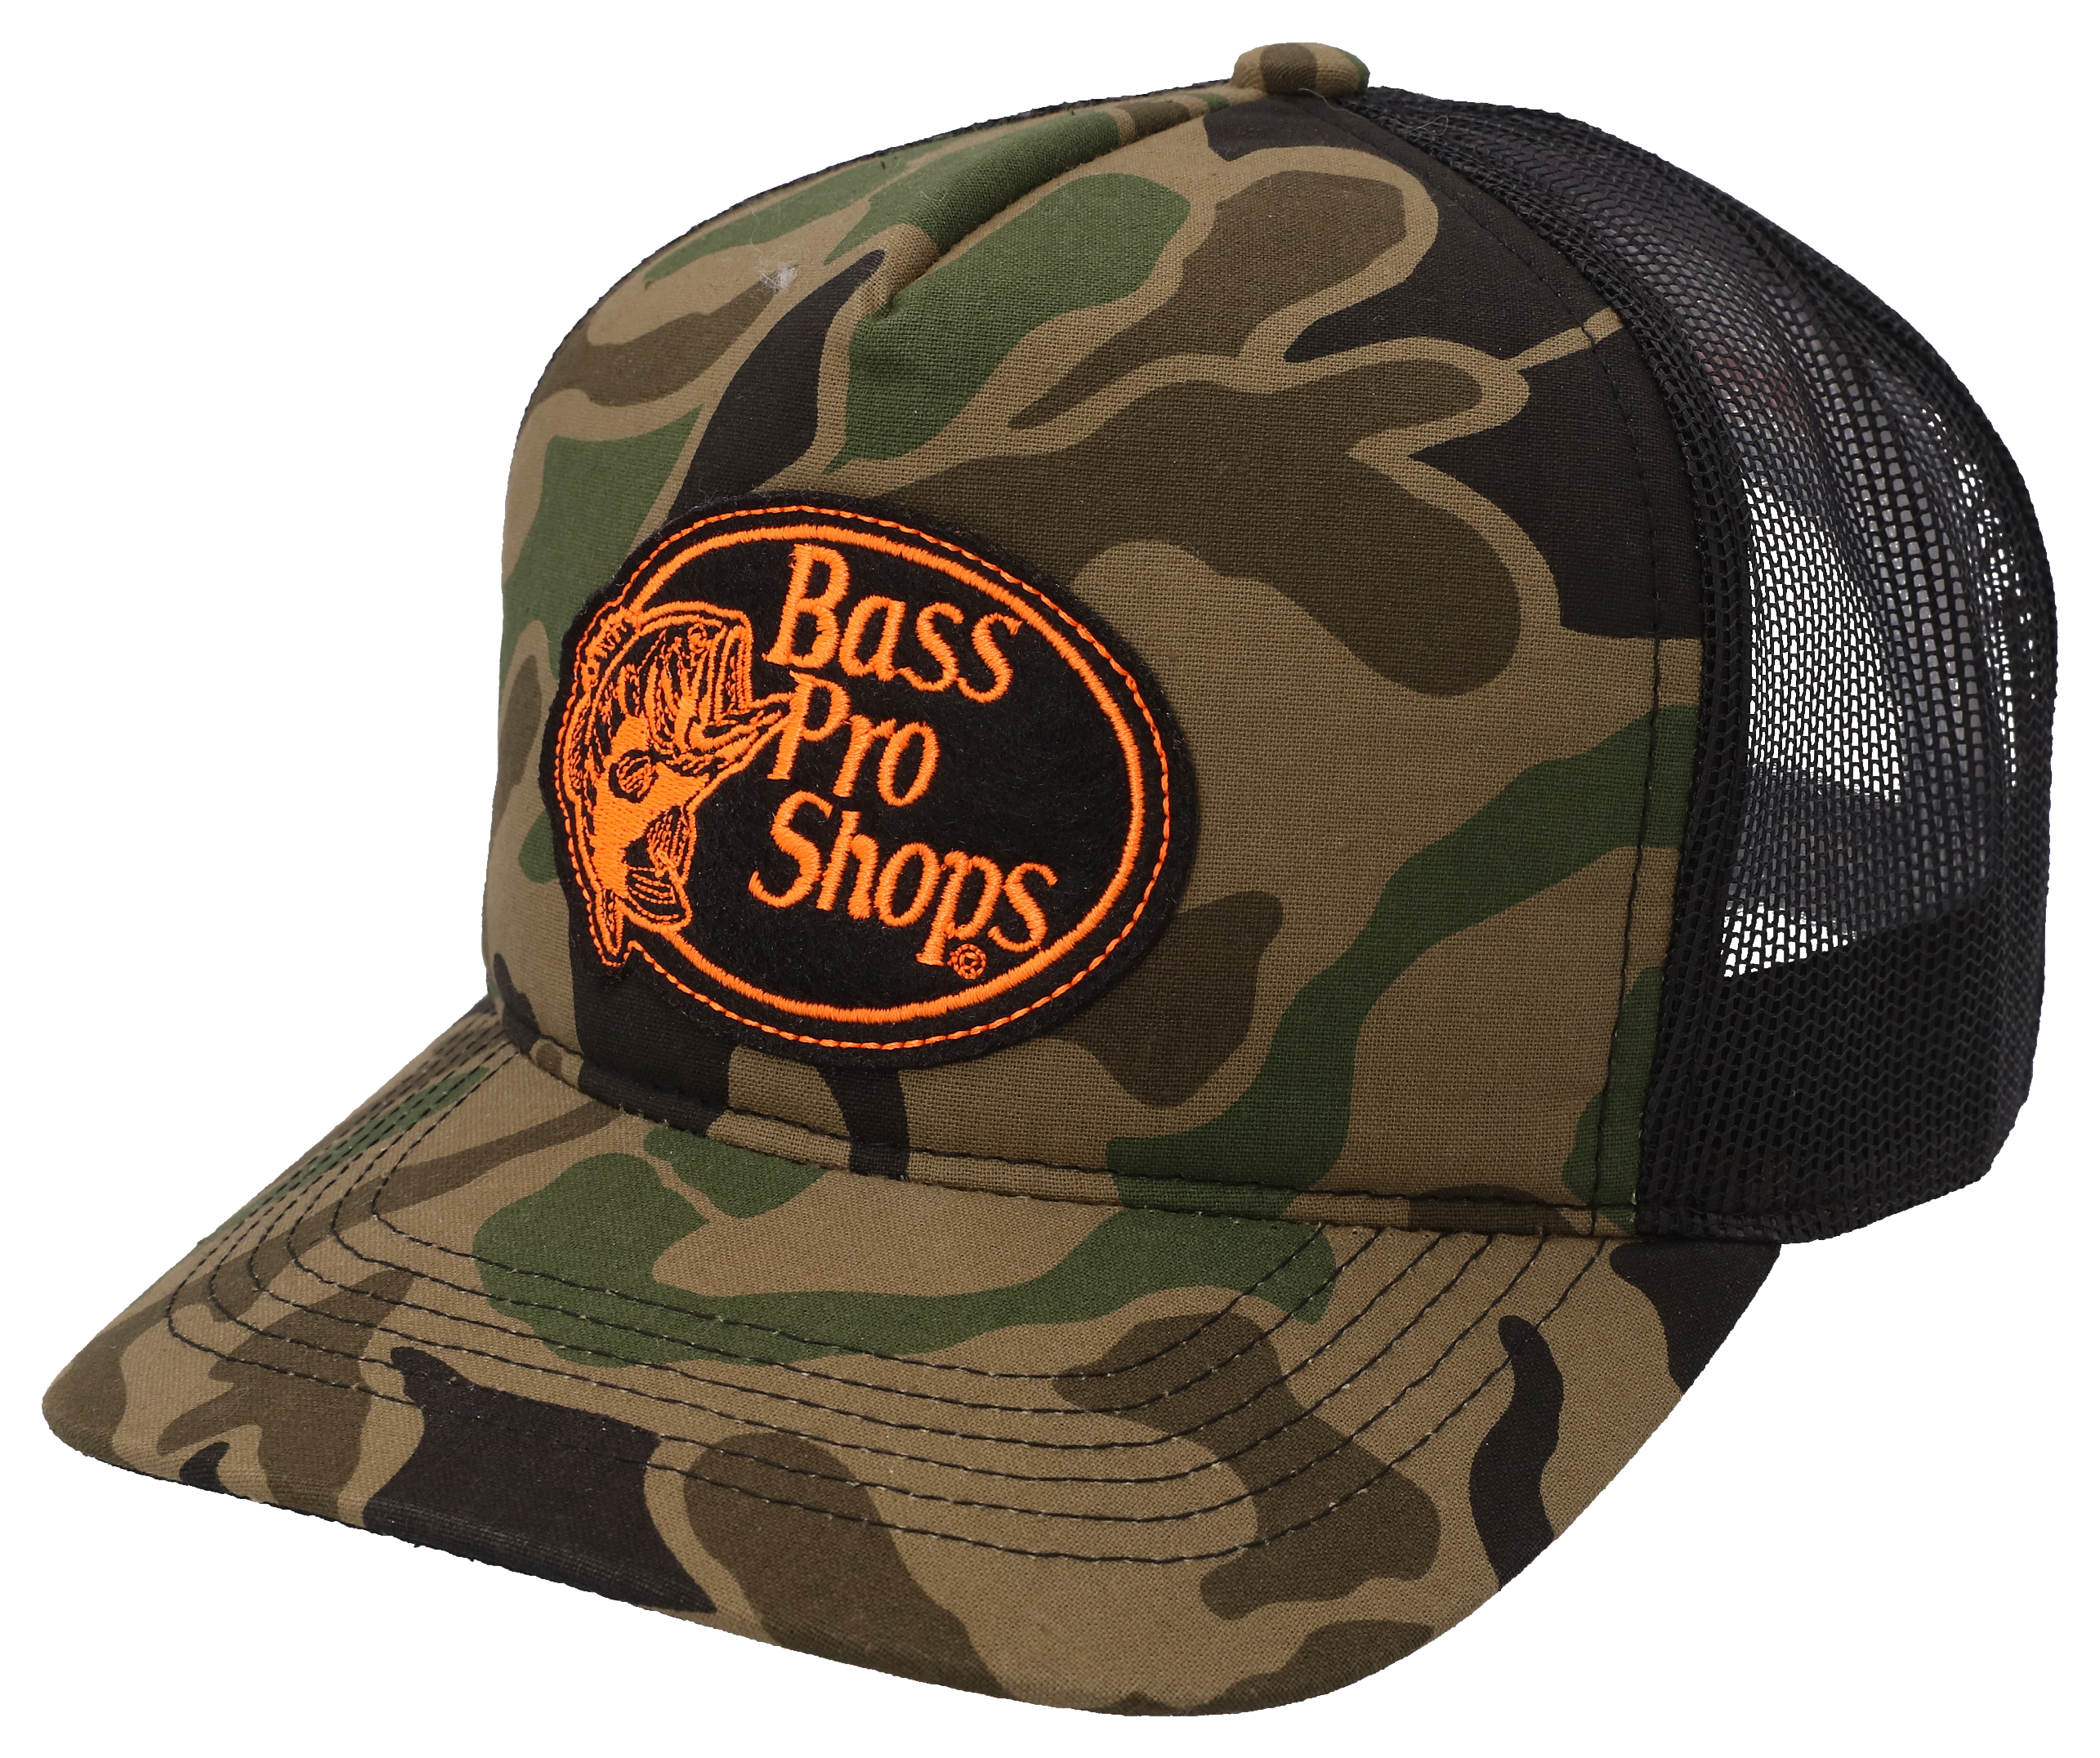 Bass Pro Shop Men's Trucker Hat Mesh Cap - Adjustable Snapback